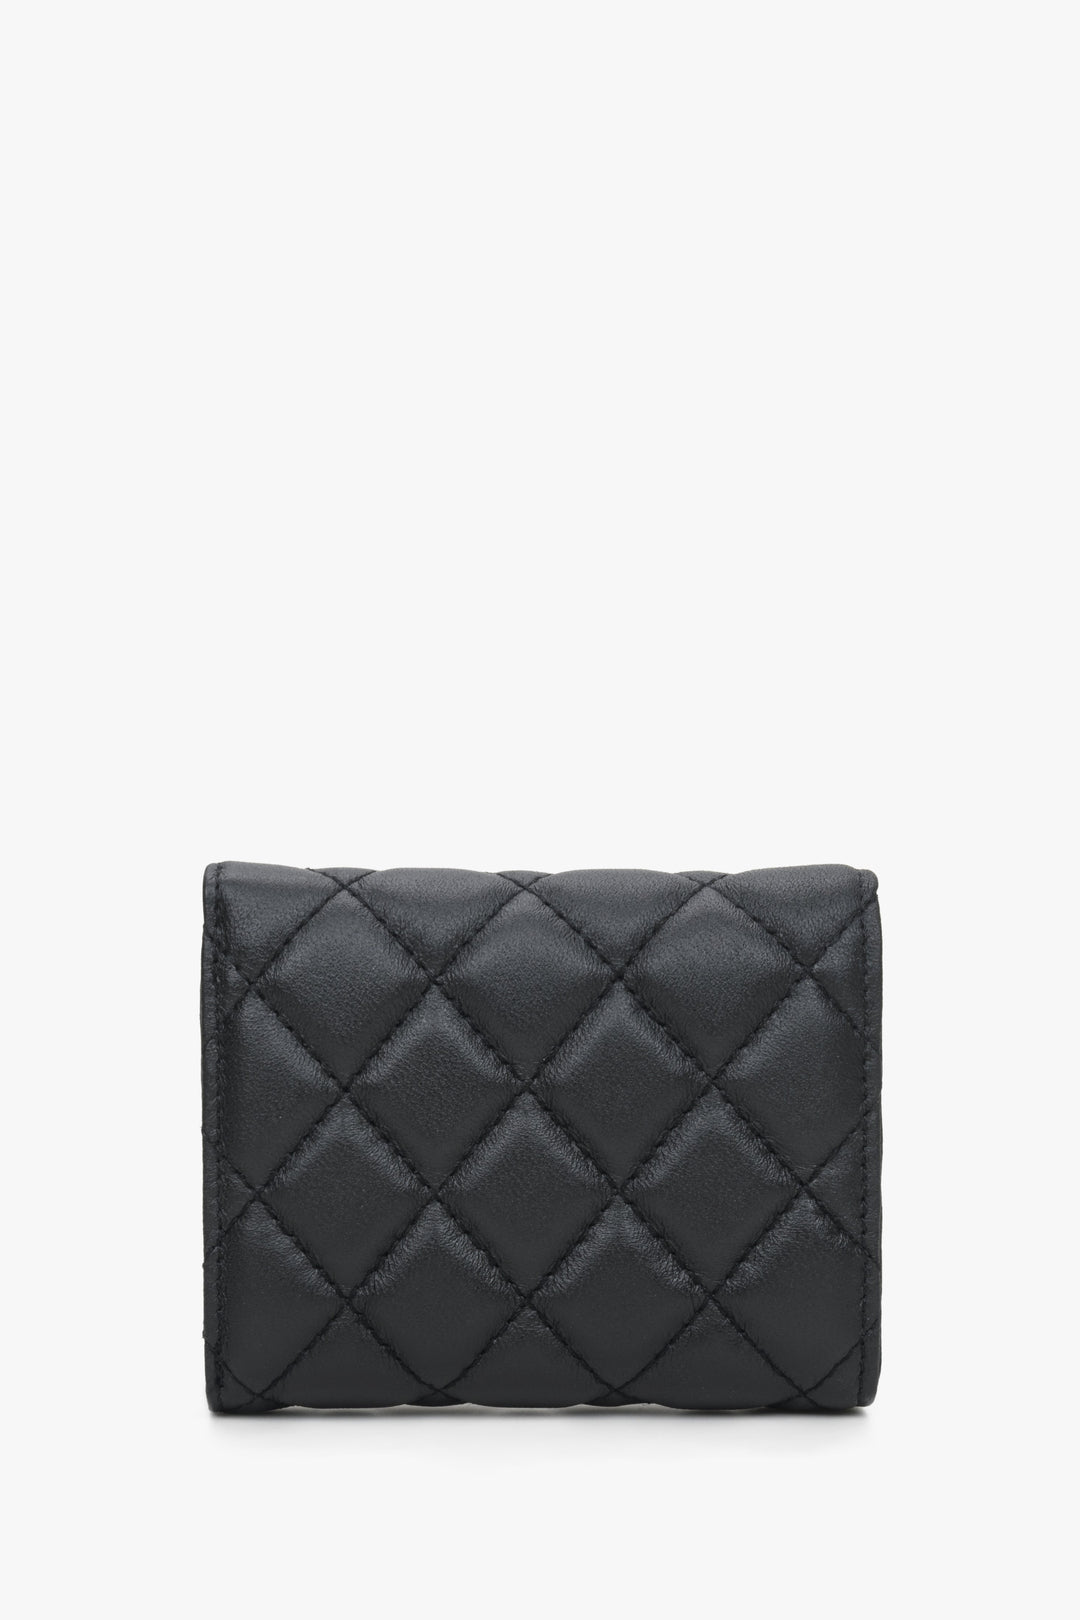 A handy women's black wallet with Estro embossing - back side.